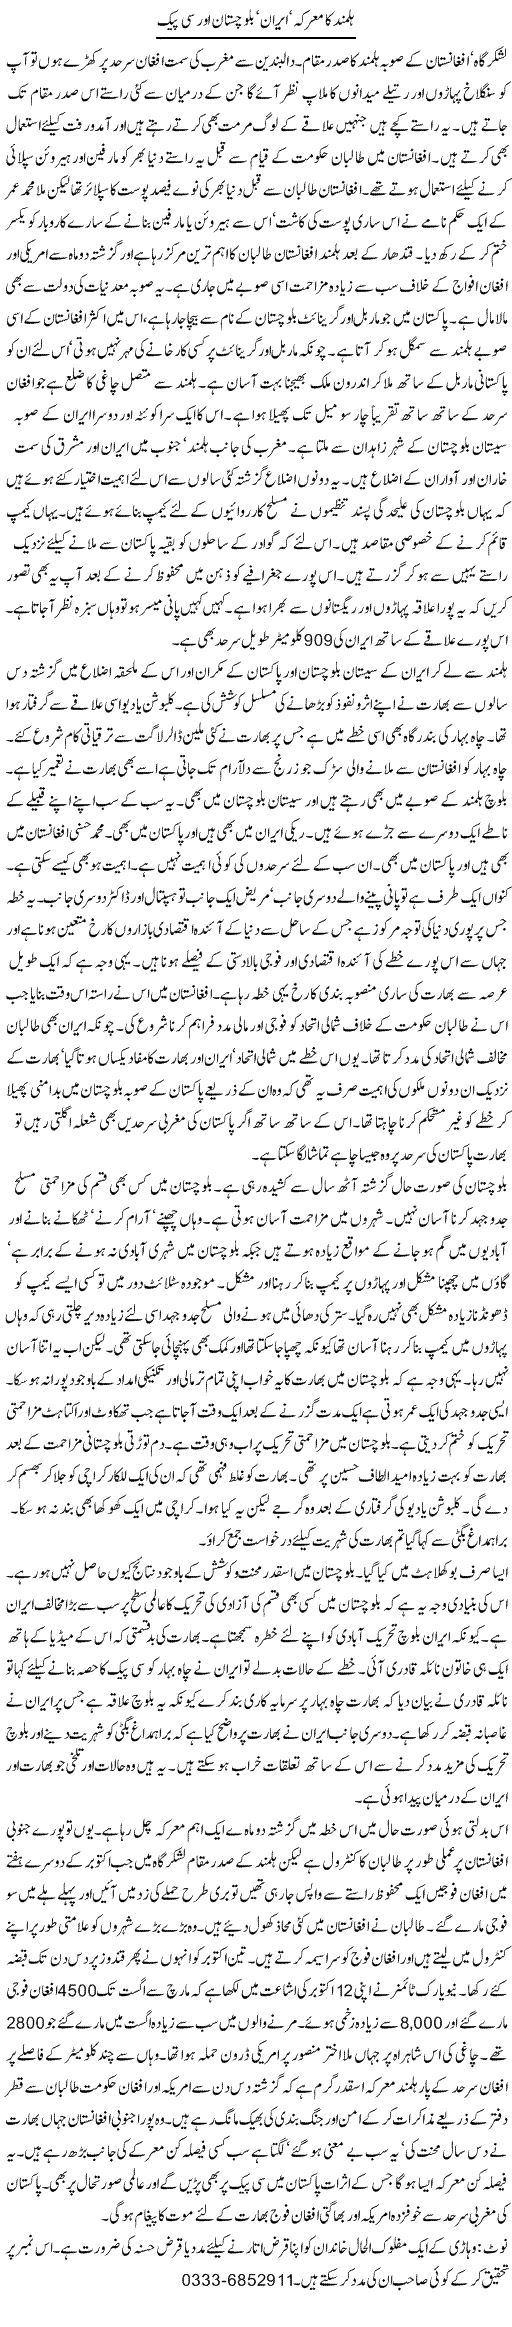 Hilmand Ka Marka, Iran, Balochistan Aur CPEC | Orya Maqbool Jan | Daily Urdu Columns